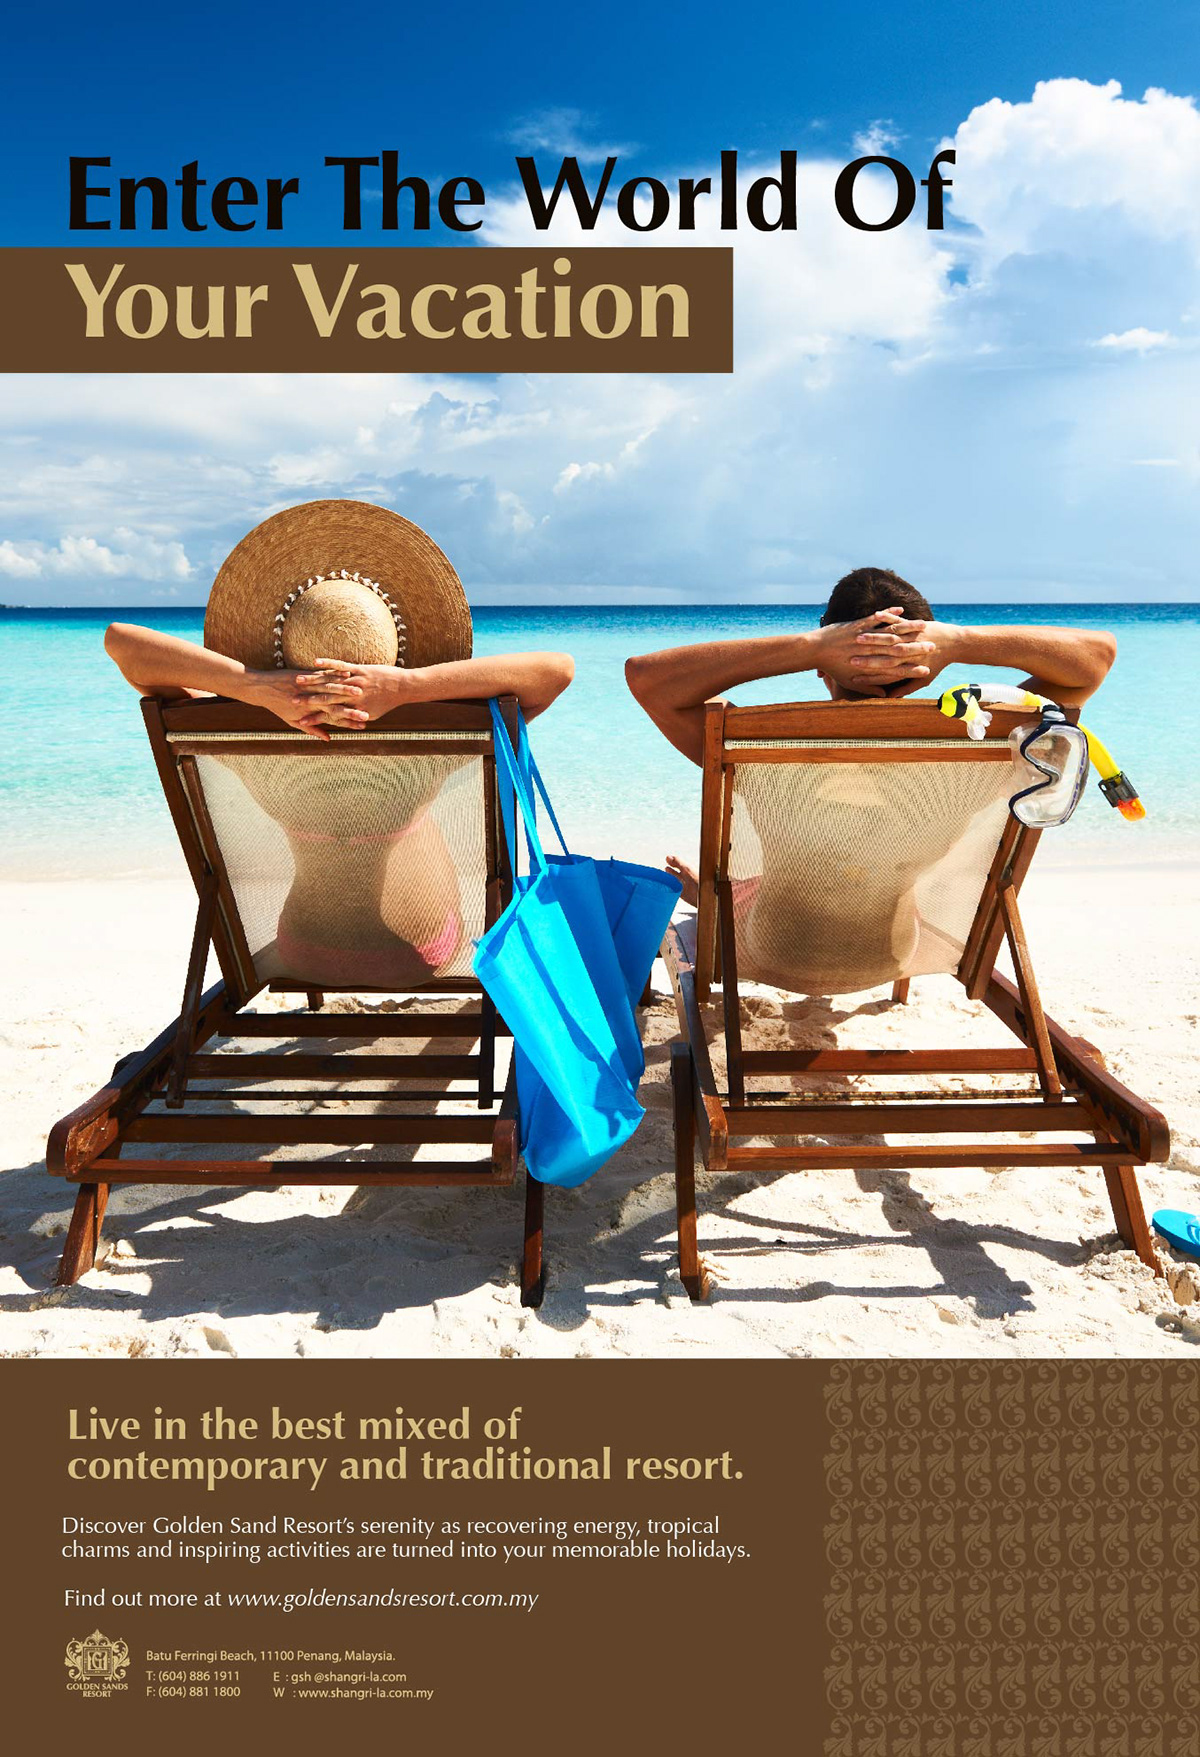 Beach resort Corporate Identity Design logo Print advertisement edm rebranding